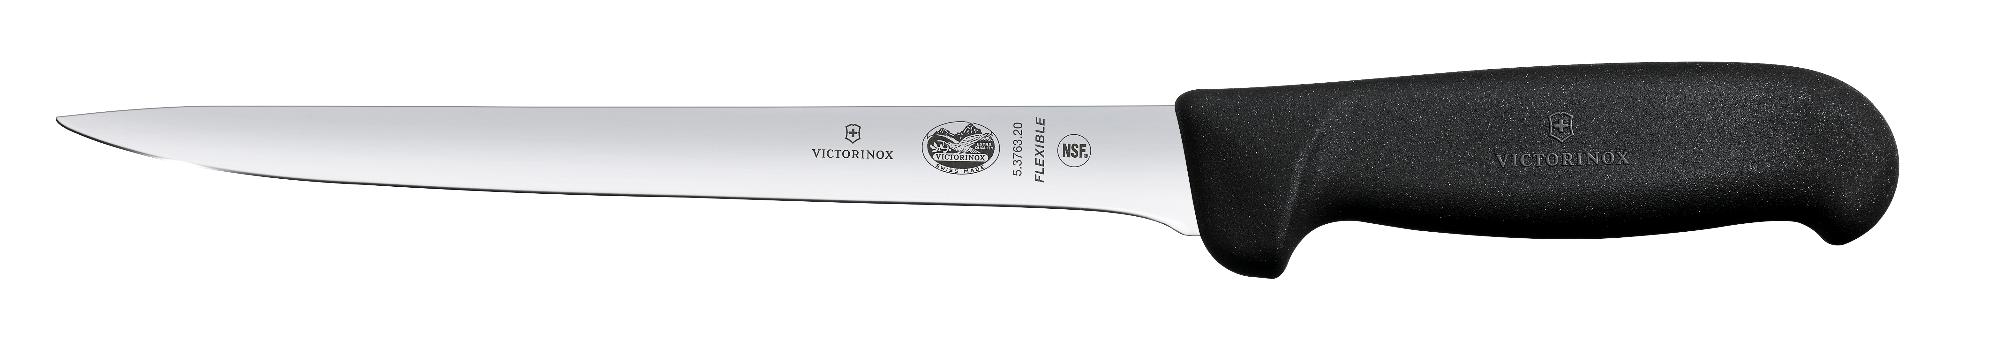 Fibrox filleting knife, narrow blade, 20 cm - black